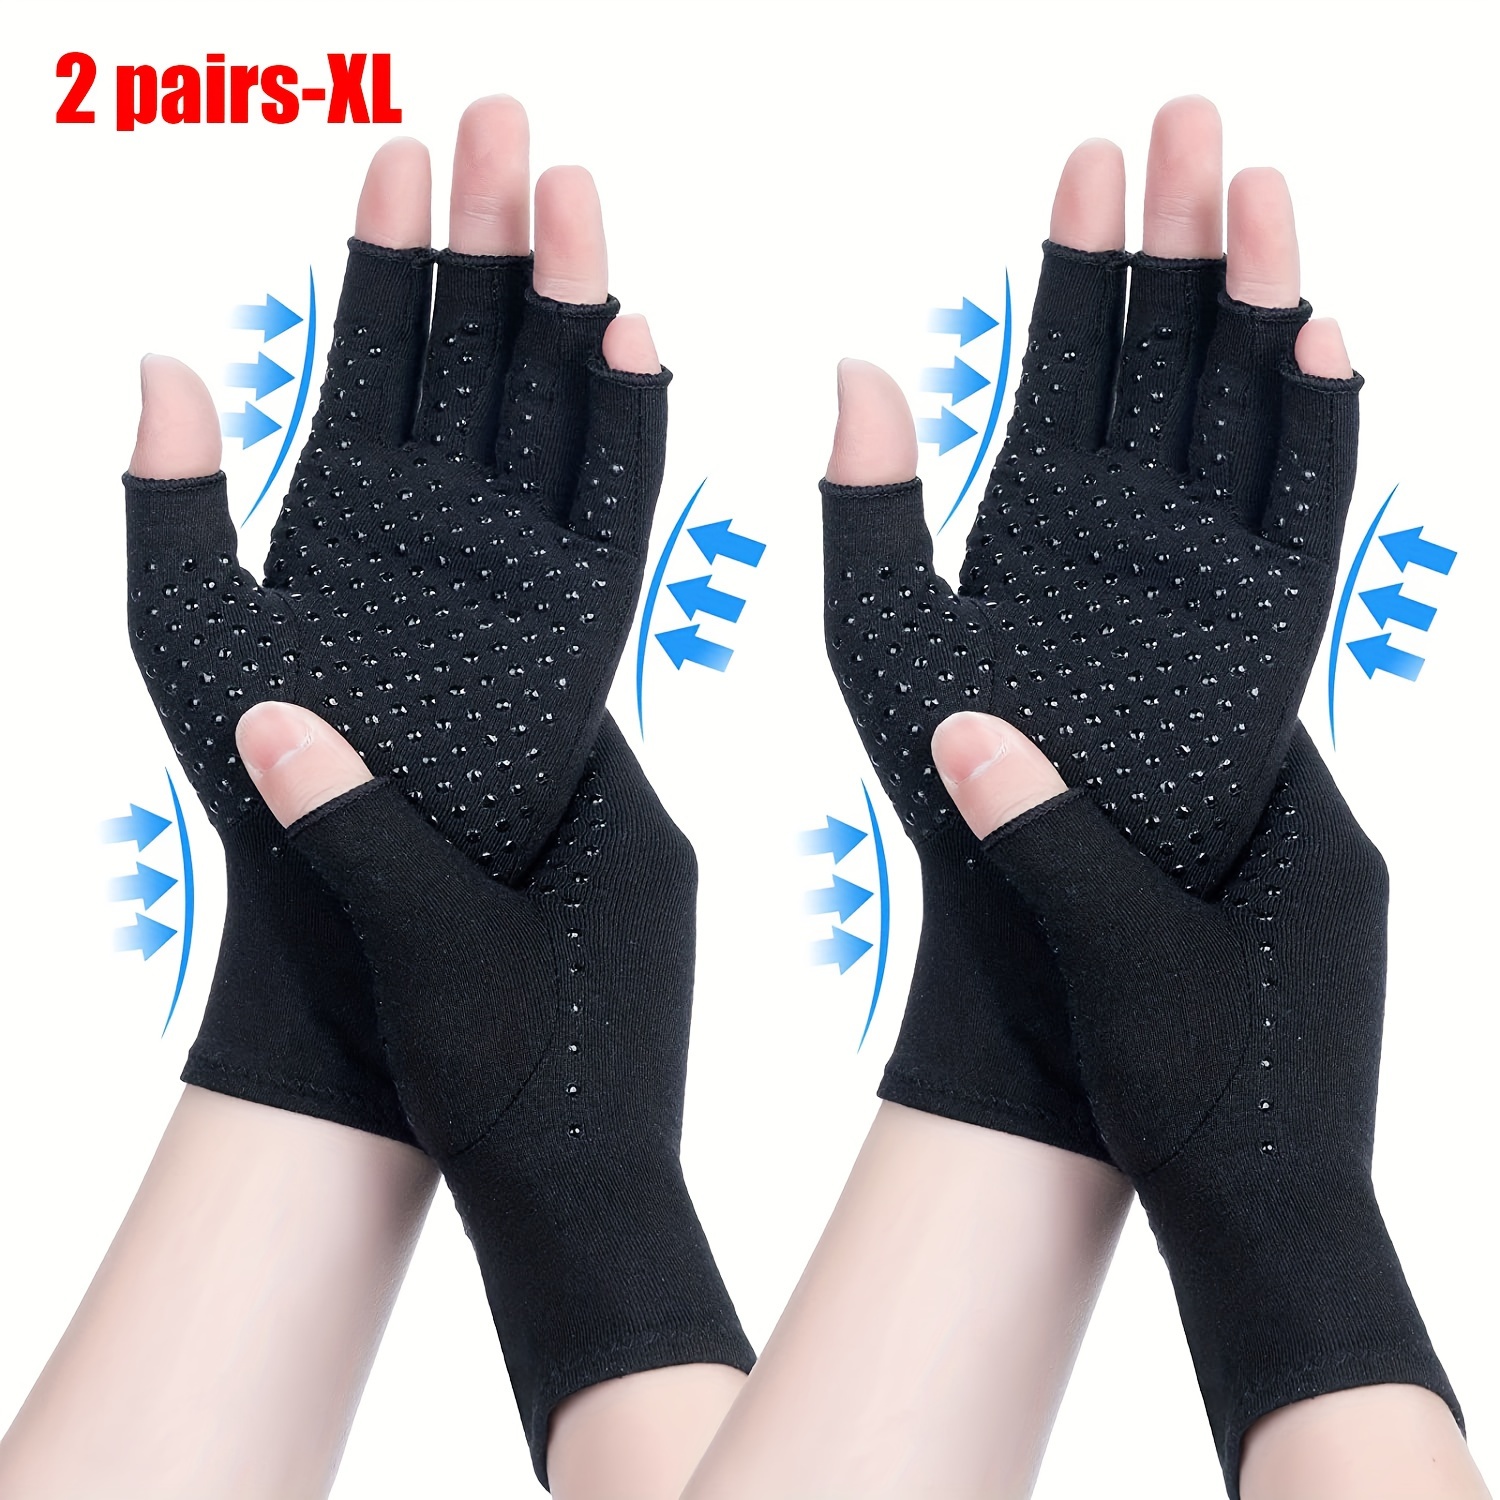 Arthritis Compression Gloves For Relieve Arthritis Carpal - Temu